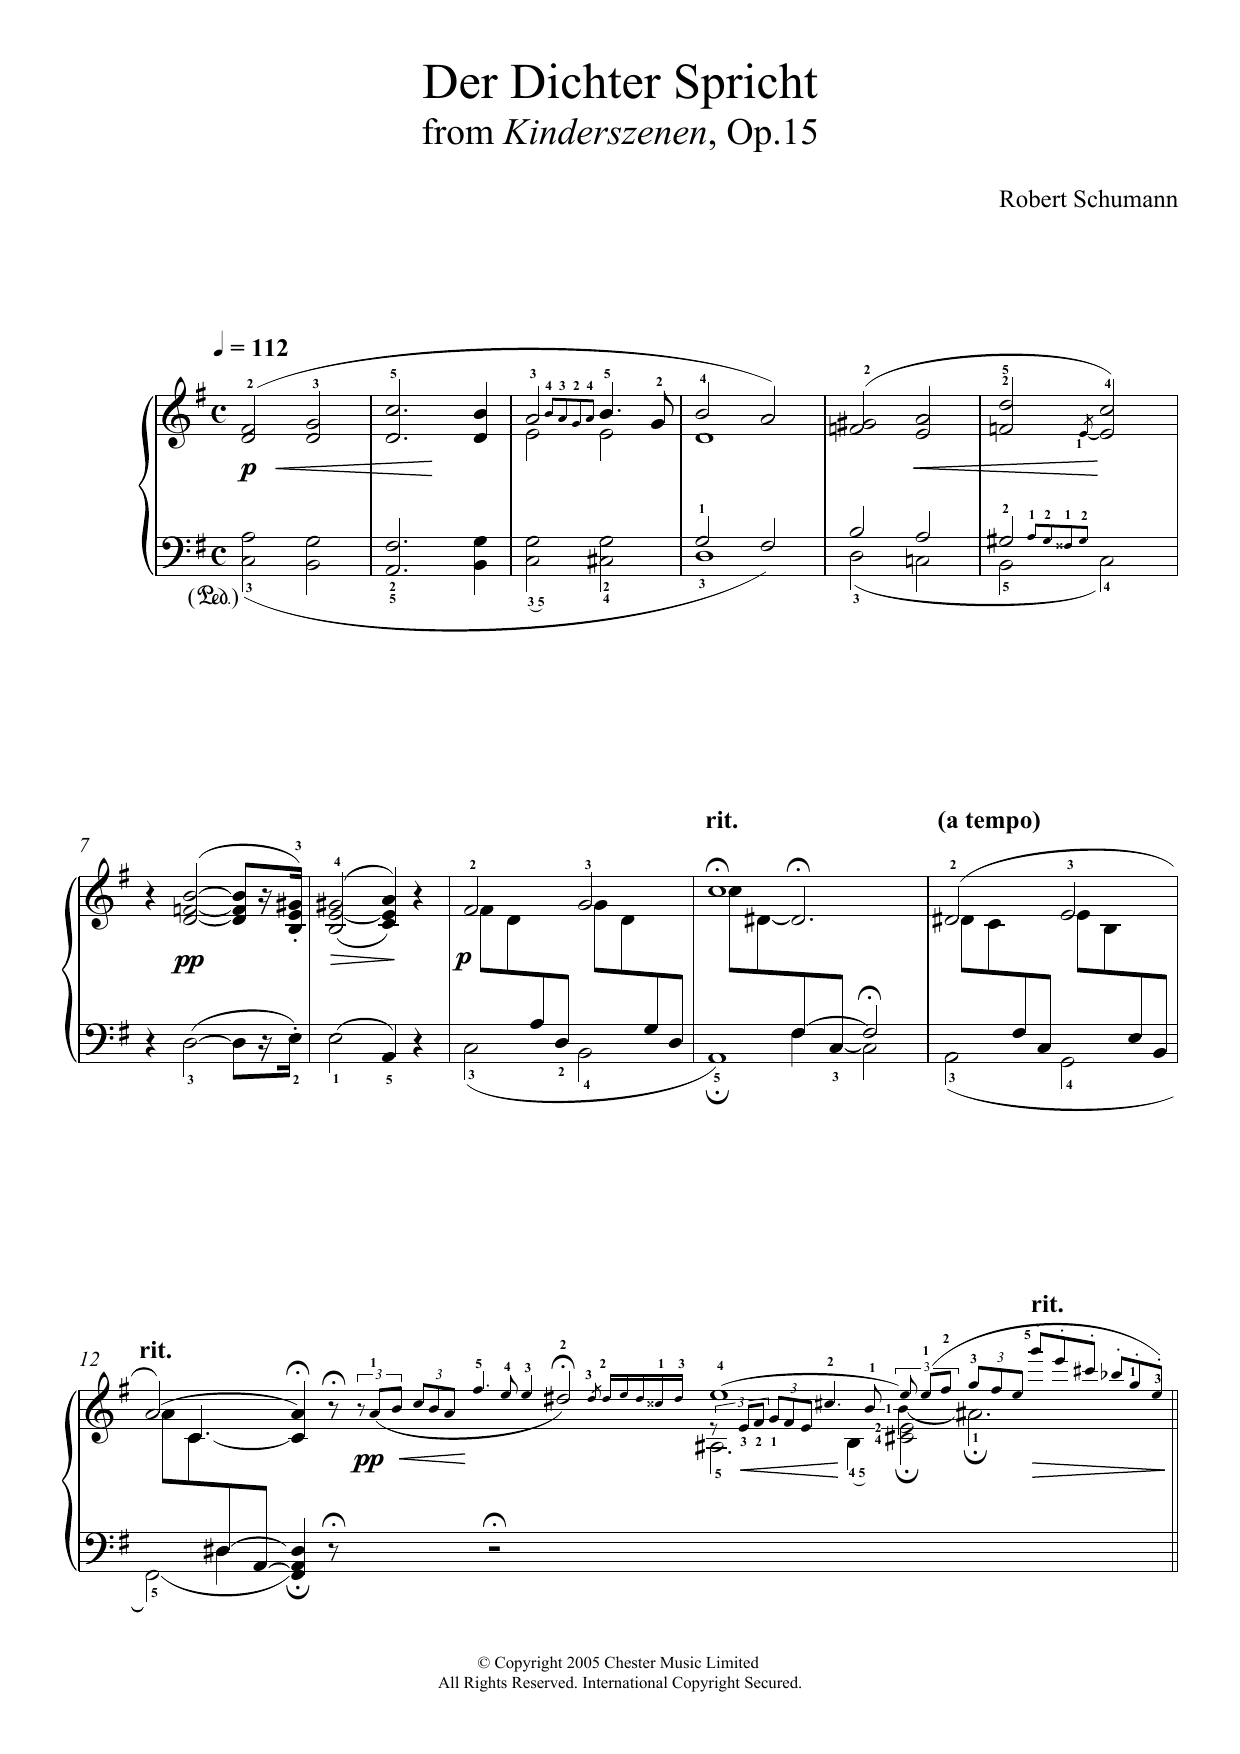 Robert Schumann Der Dichter Spricht Sheet Music Notes & Chords for Piano - Download or Print PDF